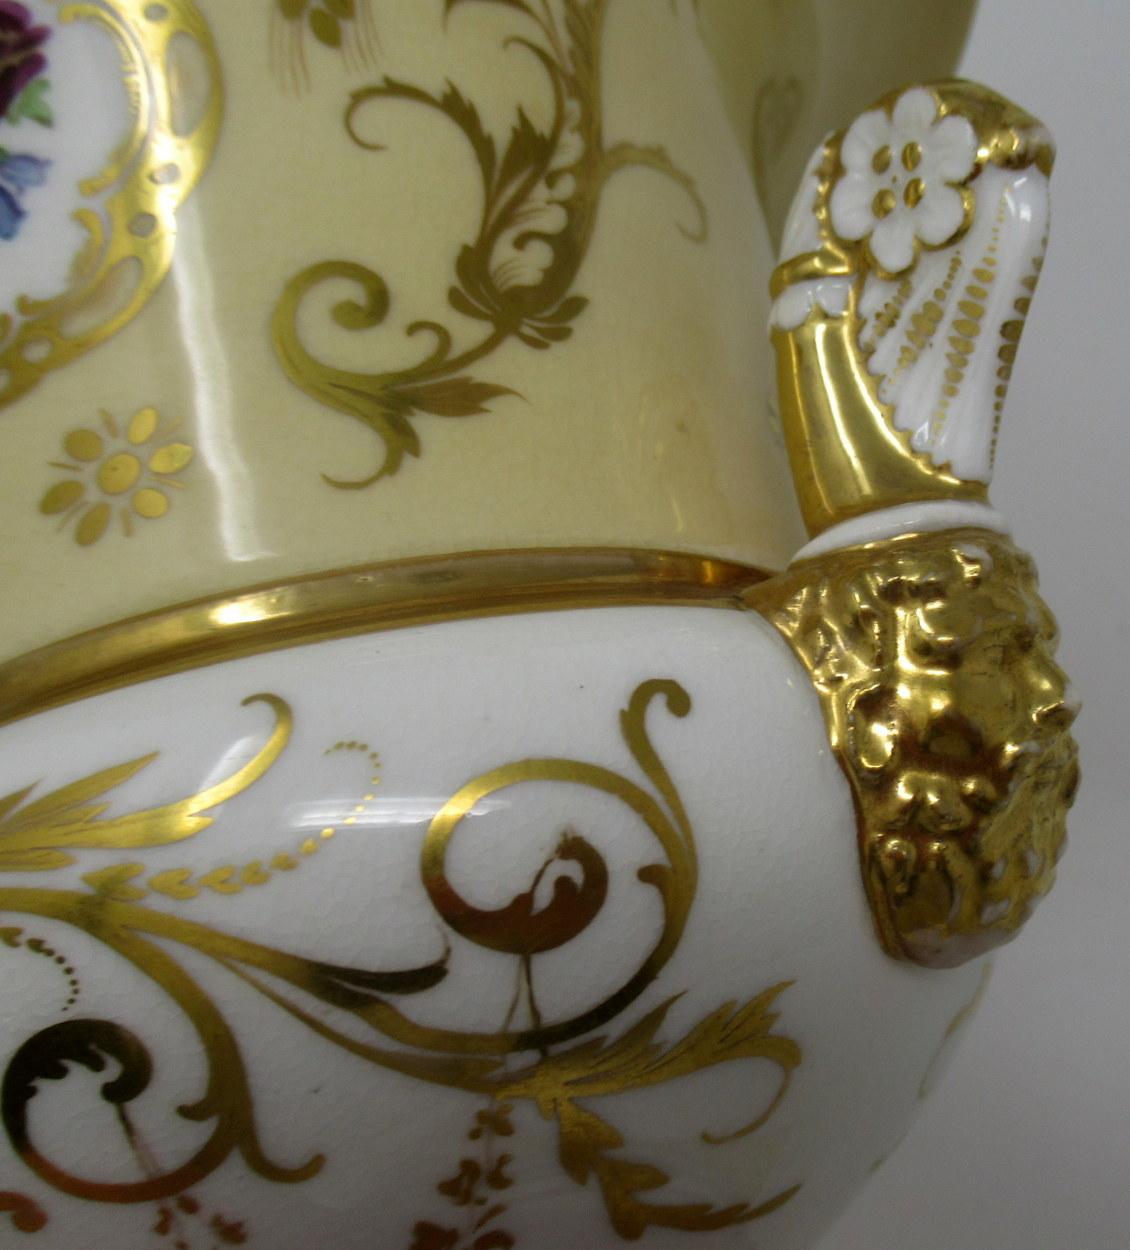 Ceramic Coalport Campana Porcelain Vase Urn Hand Painted Still Life Flowers 19th Century